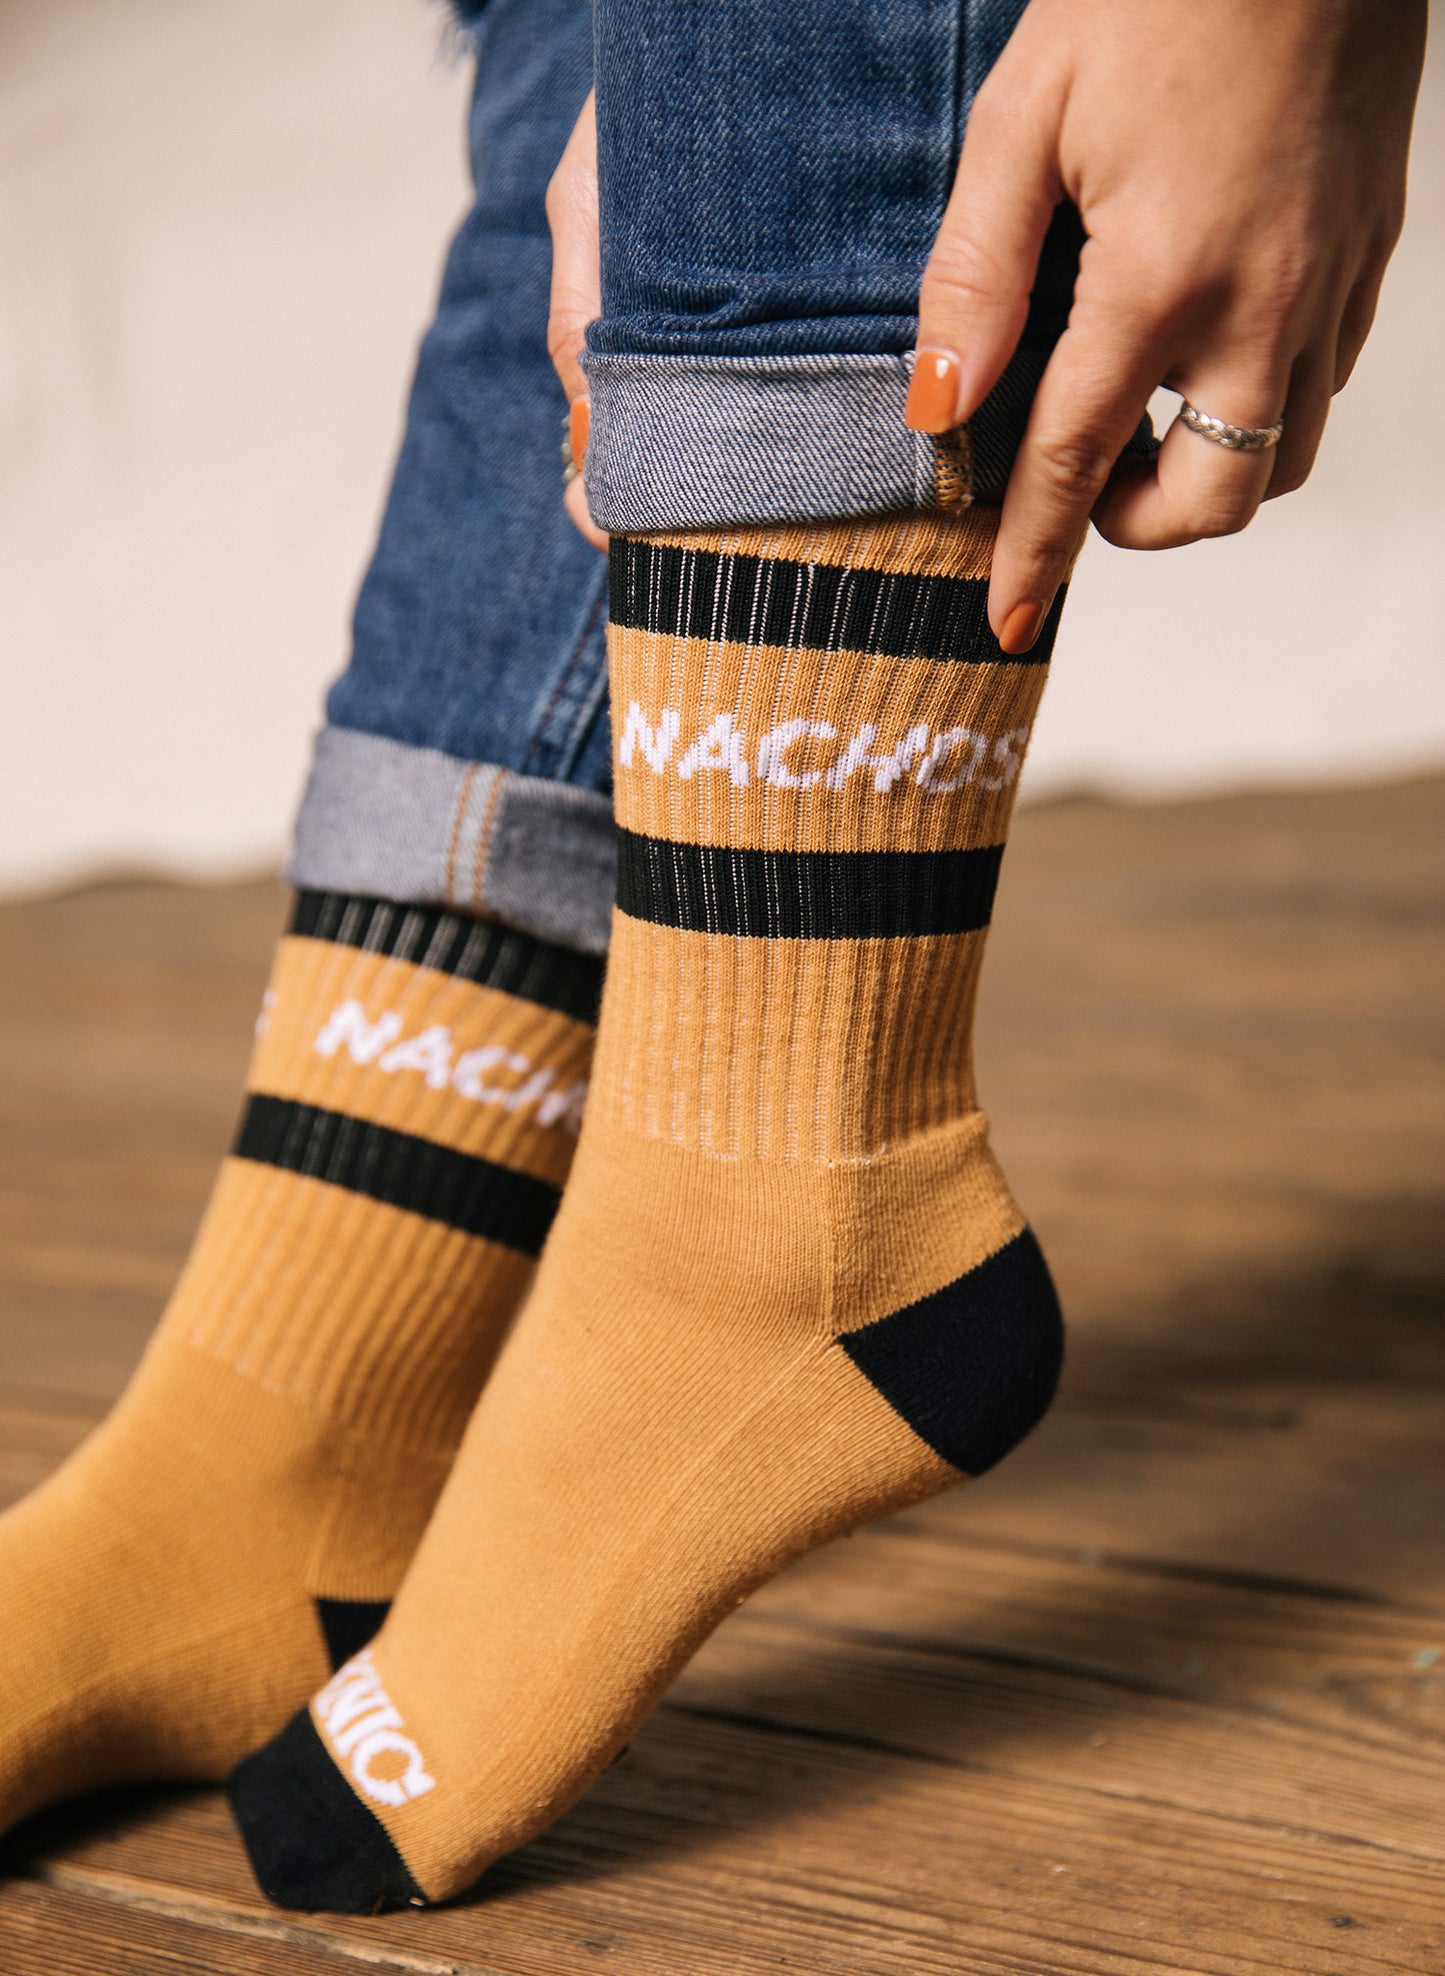 Foodie Nachos Snacks Salsa Vintage Striped Crew Socks